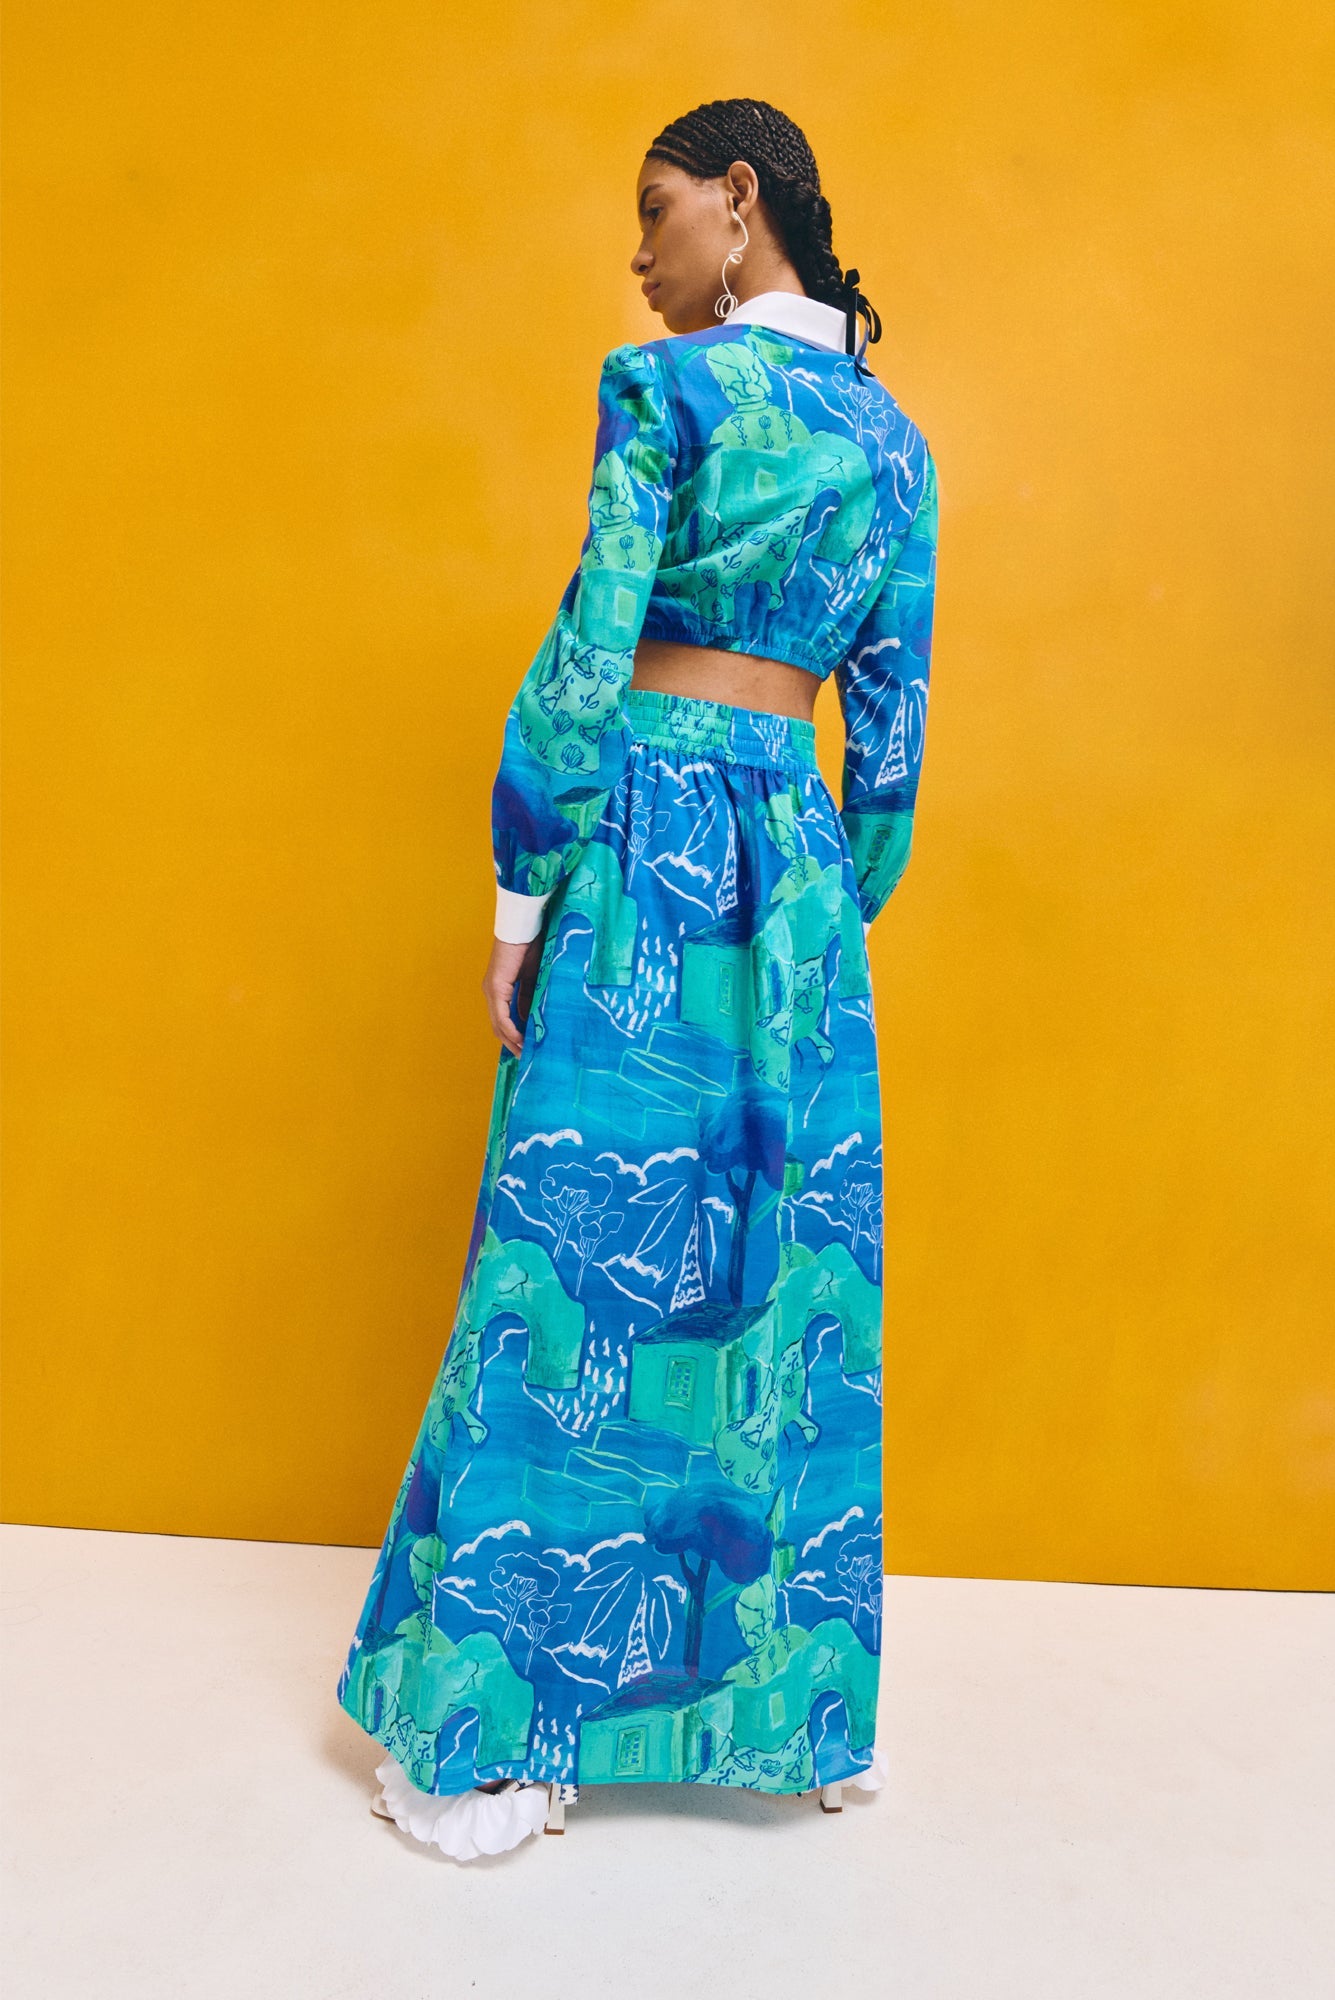 Encantada Skirt in Siembra Azul Print